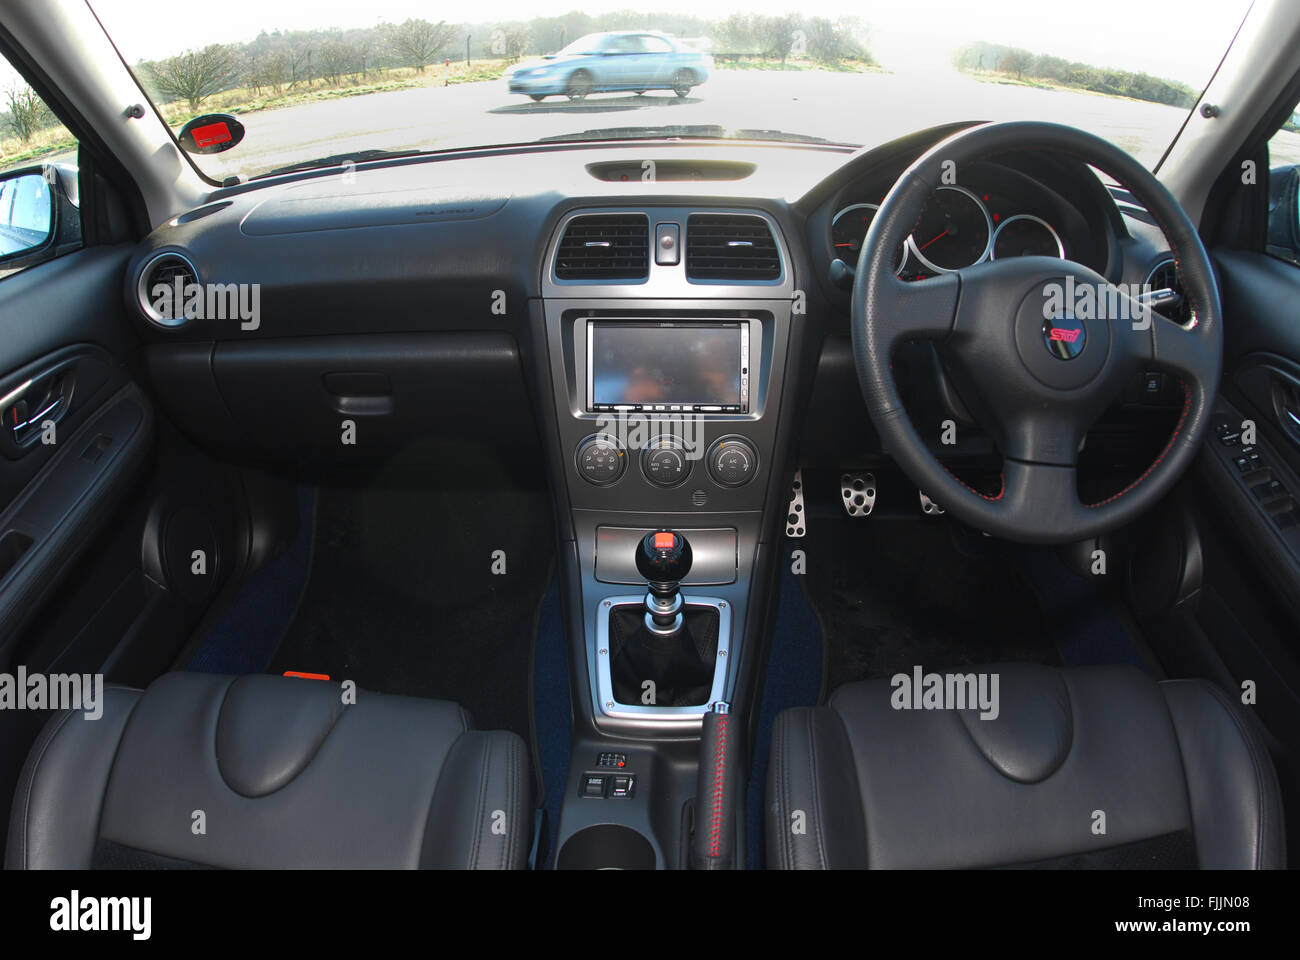 2006 RB320 special edition Subaru Impreza 4x4 sports car interior Stock Photo